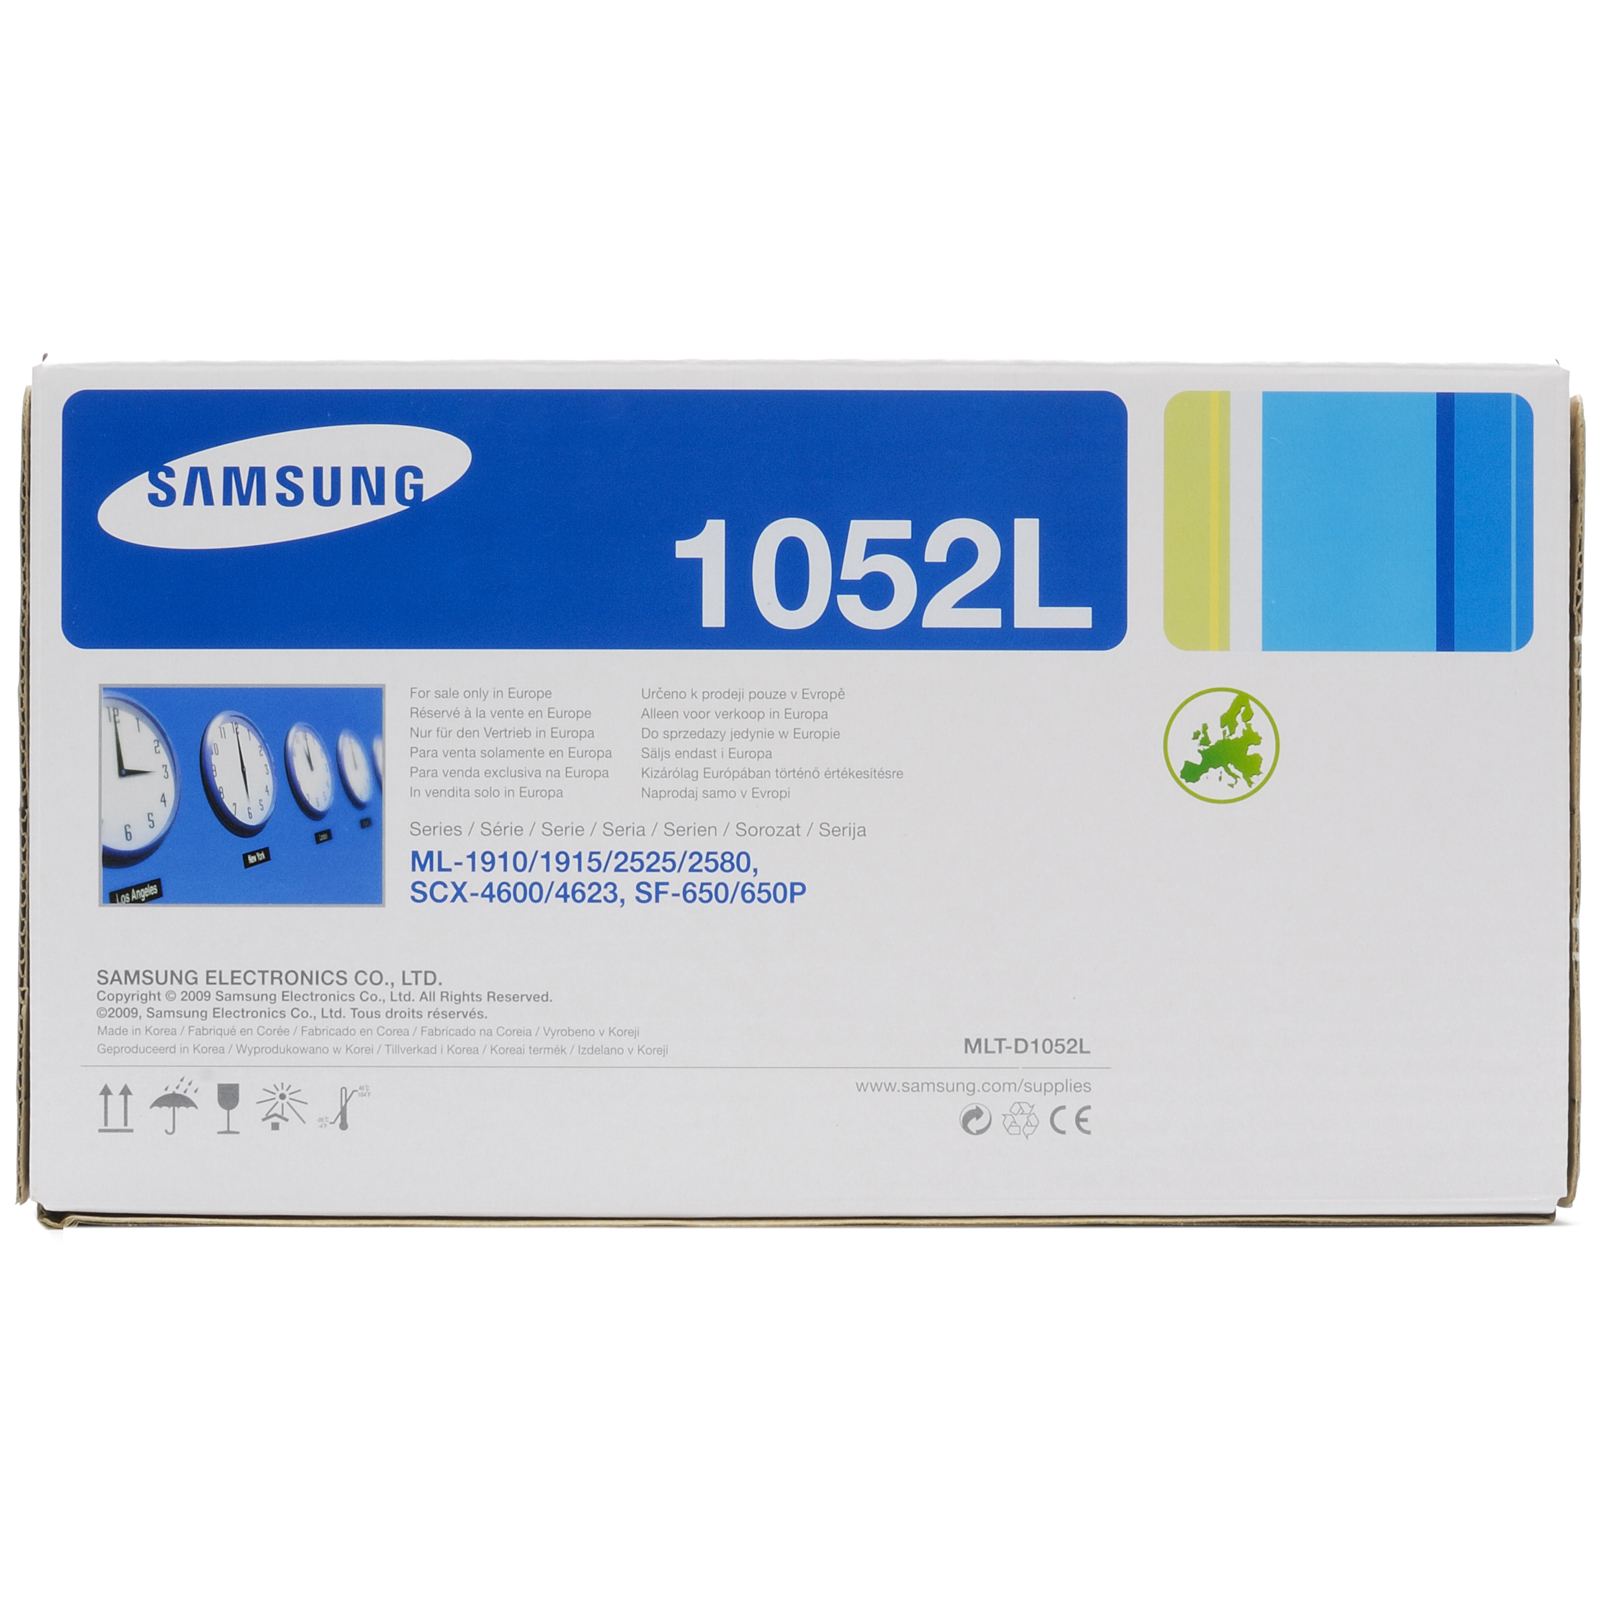 Mlt d104s картридж купить. Samsung MLT-d305l. Тонер для Samsung d1052. Samsung Toner Cartridge MLT-d117s. D1052l.